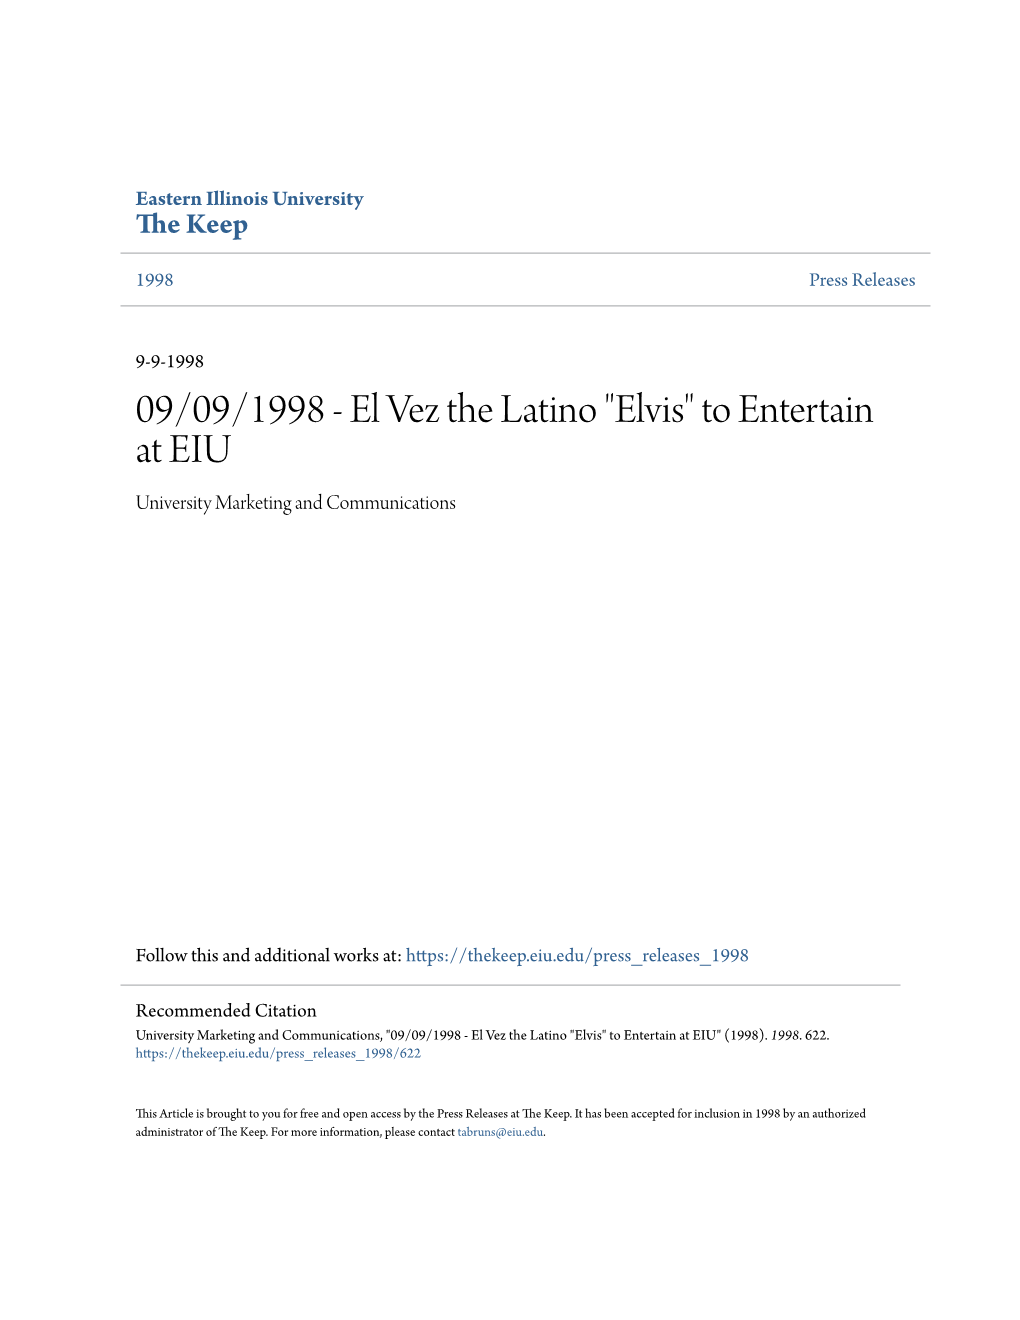 El Vez the Latino "Elvis" to Entertain at EIU University Marketing and Communications